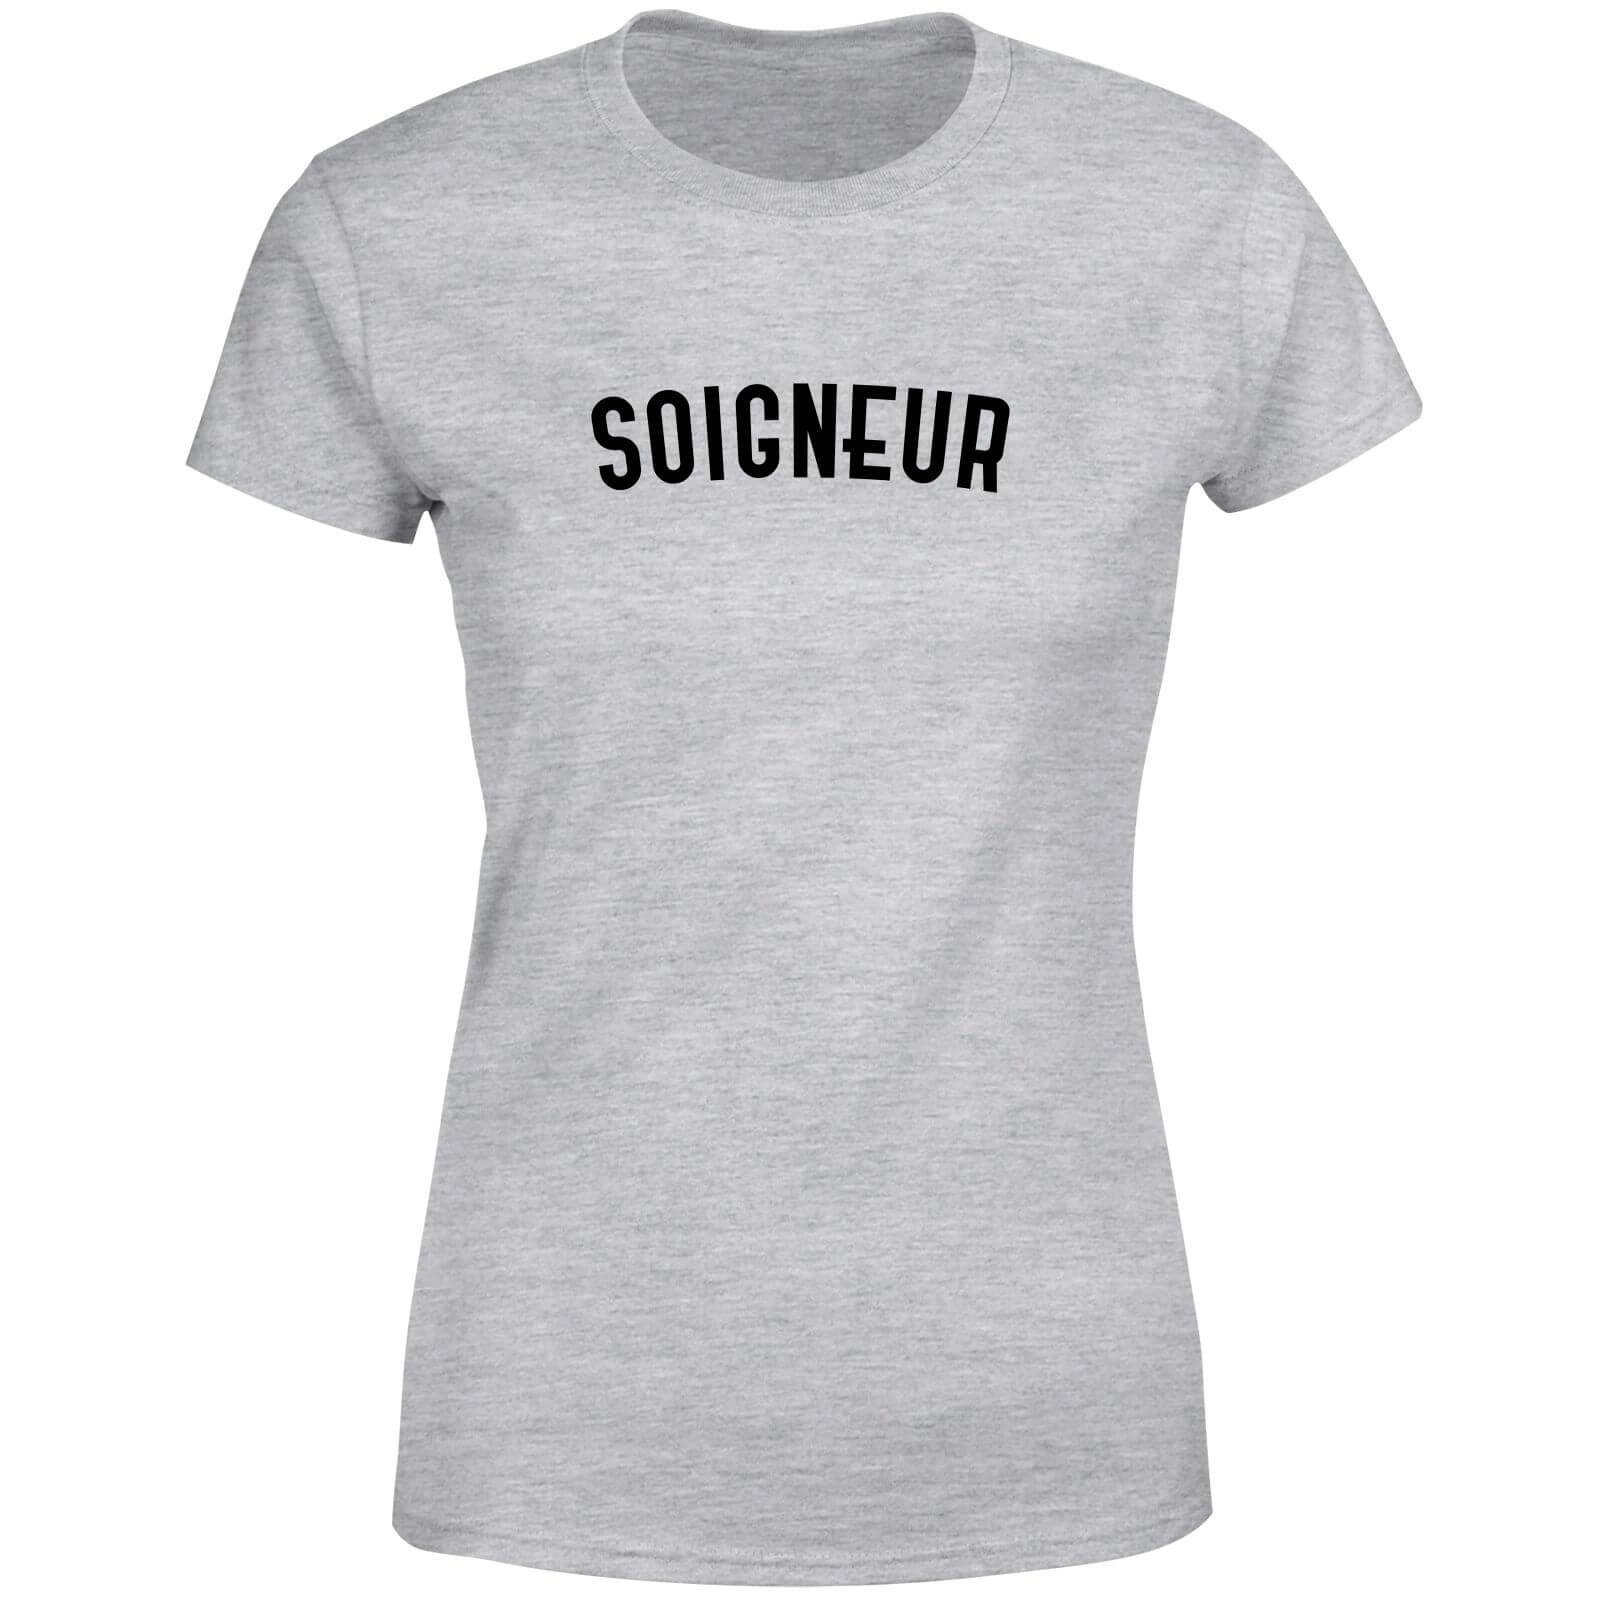 Soigneur Women's T-Shirt - Grey - M - Grey